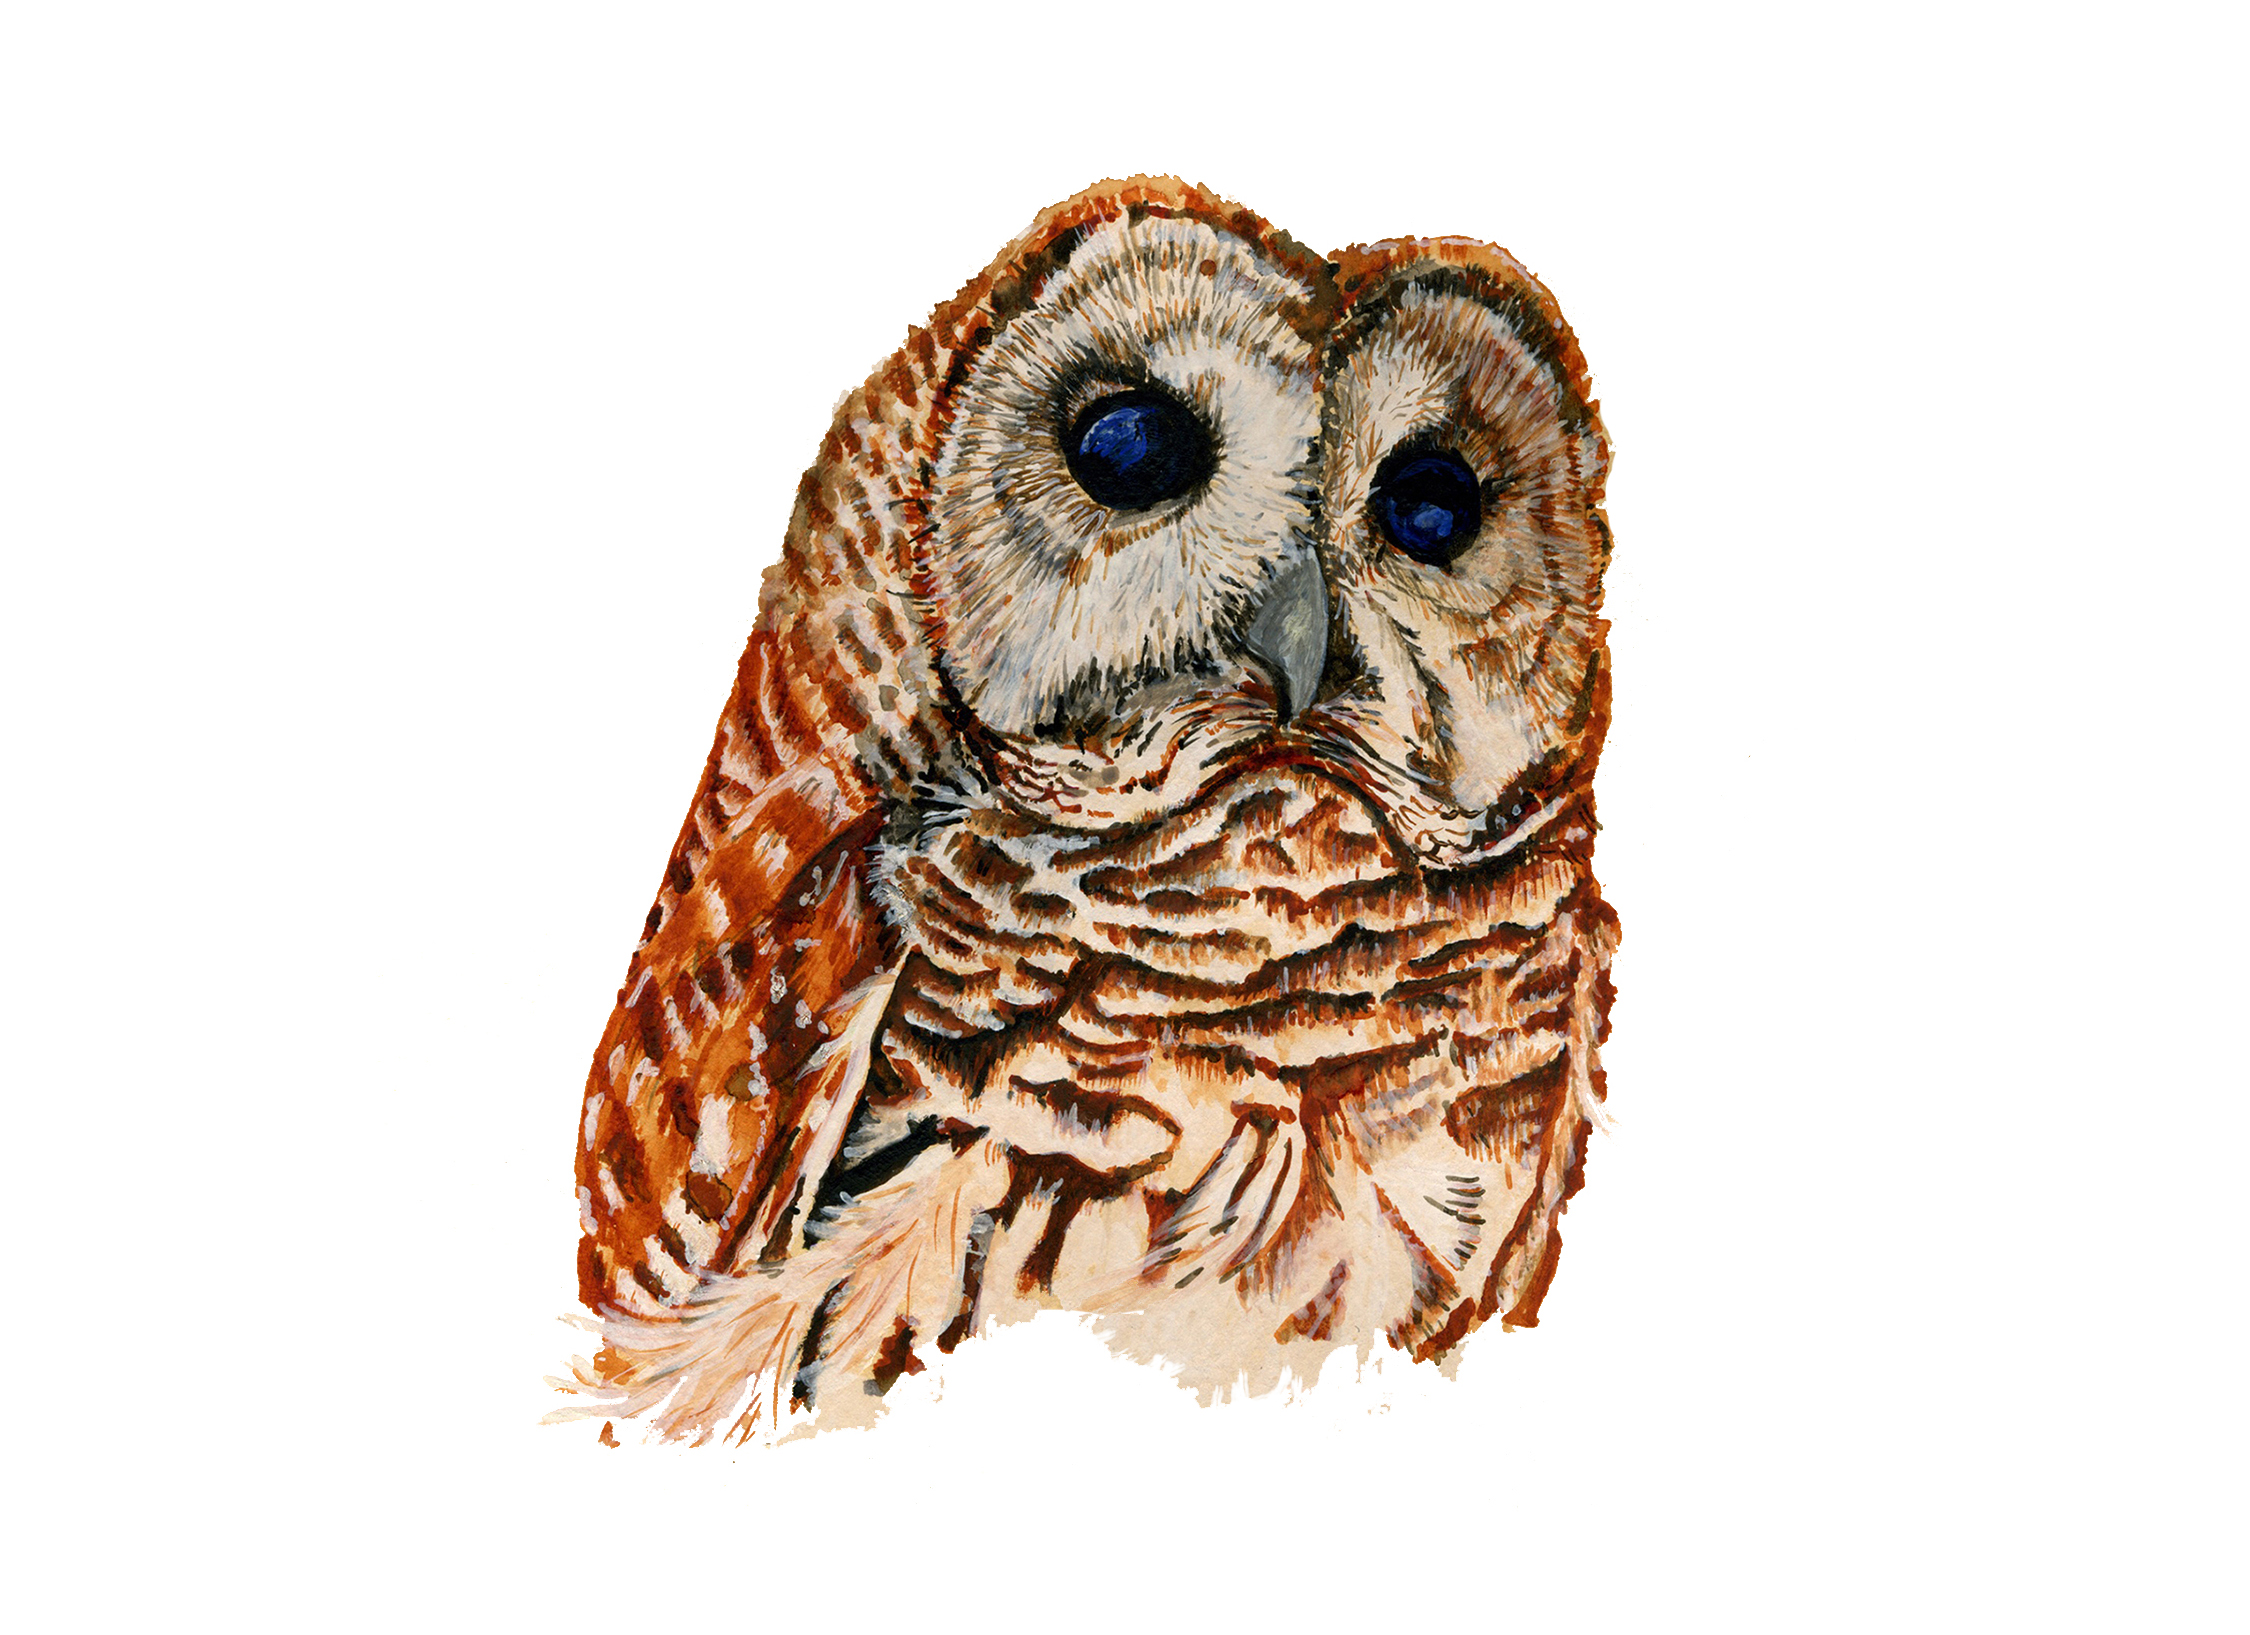  Barred Owl,   gouache   